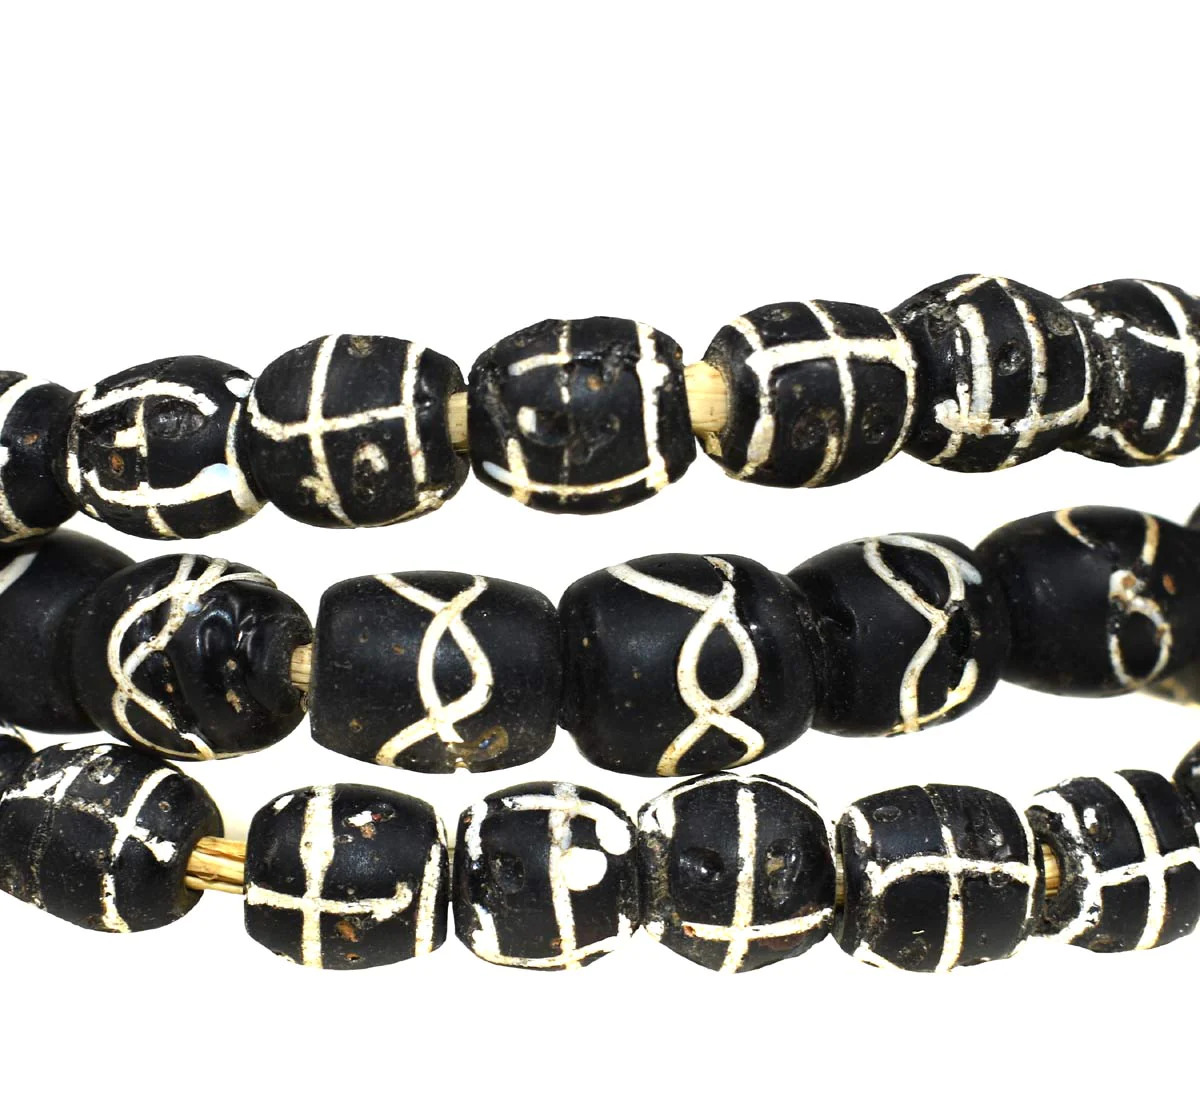 Eights Venetian Trade Beads Black White Striped Africa Rare 32 Inch